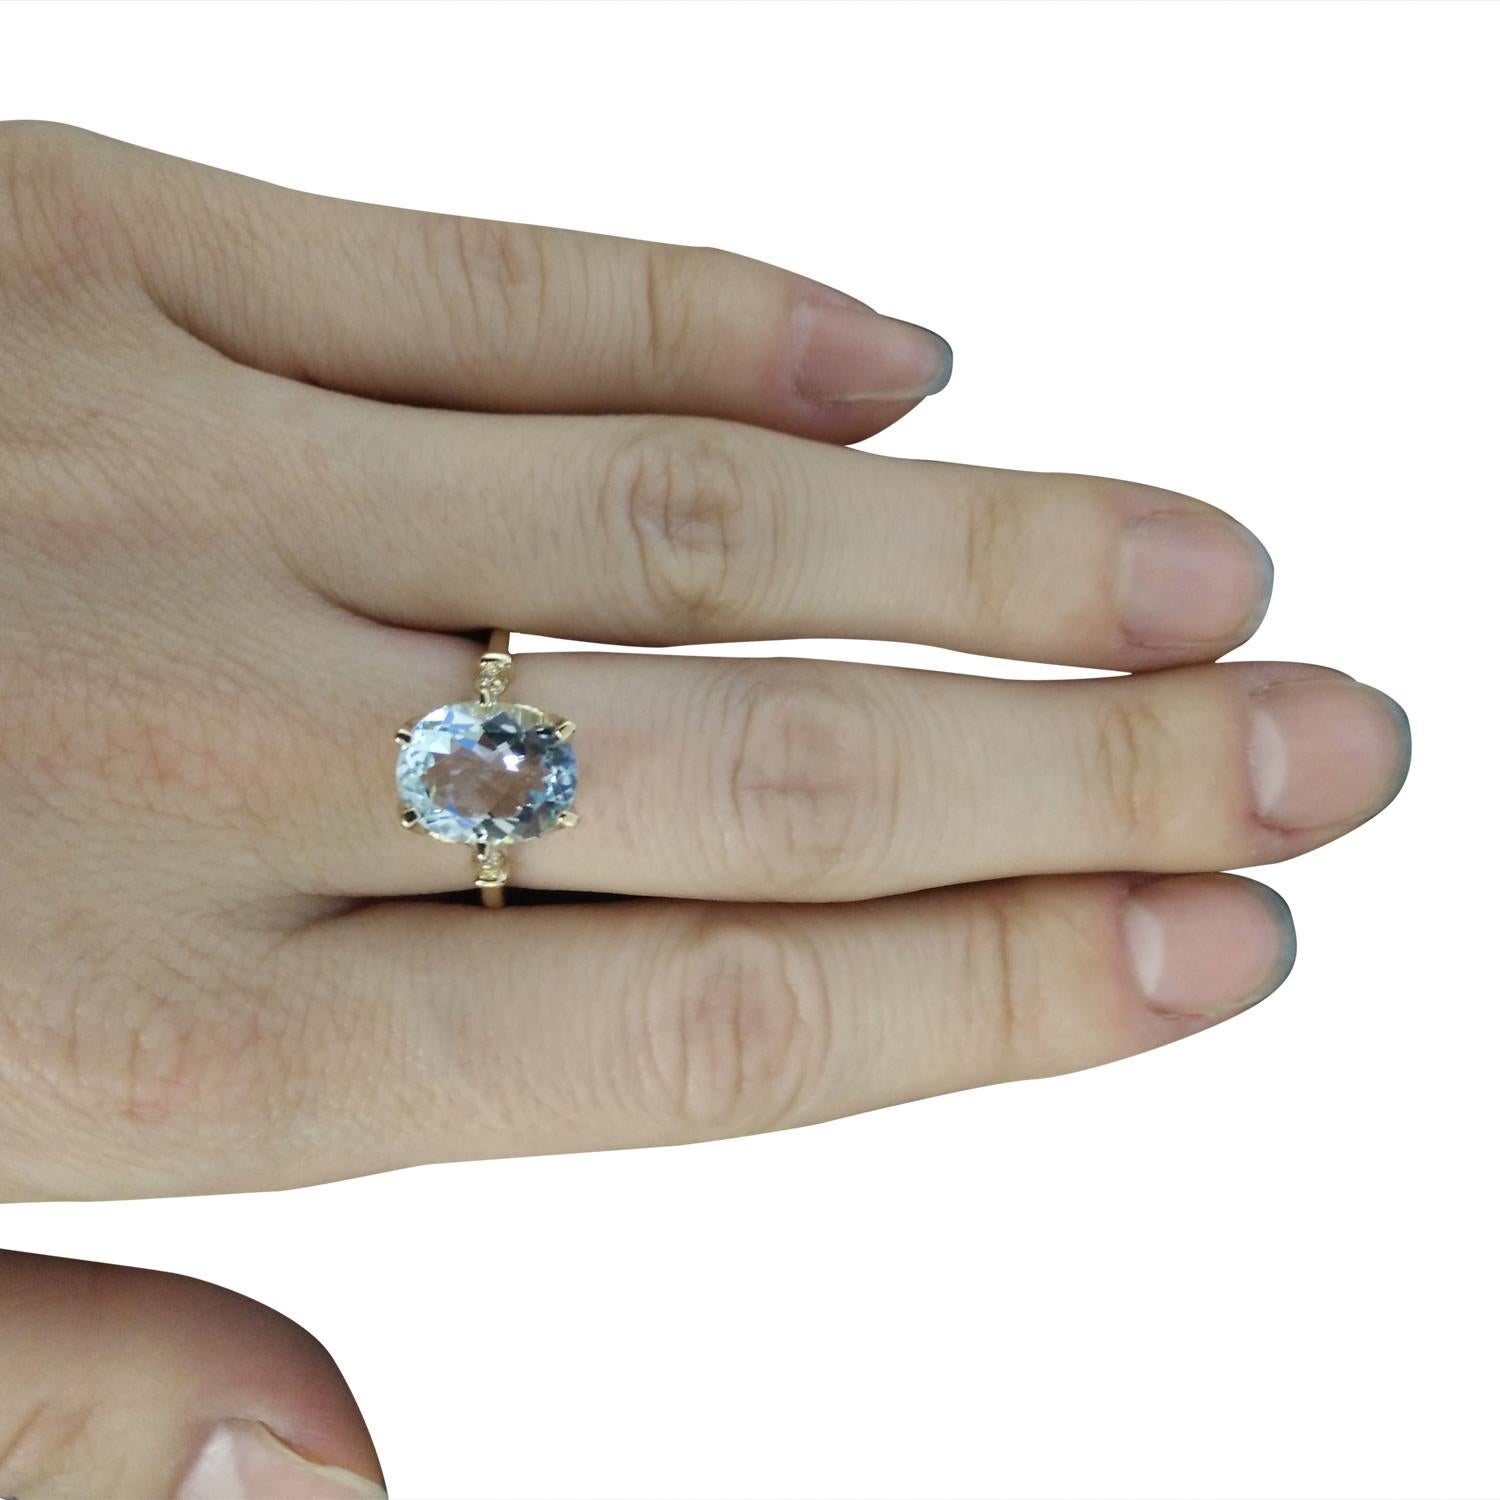 3.70 Carat Natural Aquamarine 14 Karat Solid Yellow Gold Diamond Ring
Stamped: 14K 
Ring Size: 7 
Total Ring Weight: 4.3 Grams 
Aquamarine Weight: 3.55 Carat (11.00x9.00 Millimeter) 
Diamond Weight: 0.15 Carat (F-G Color, VS2-SI1 Clarity) 
Quantity: